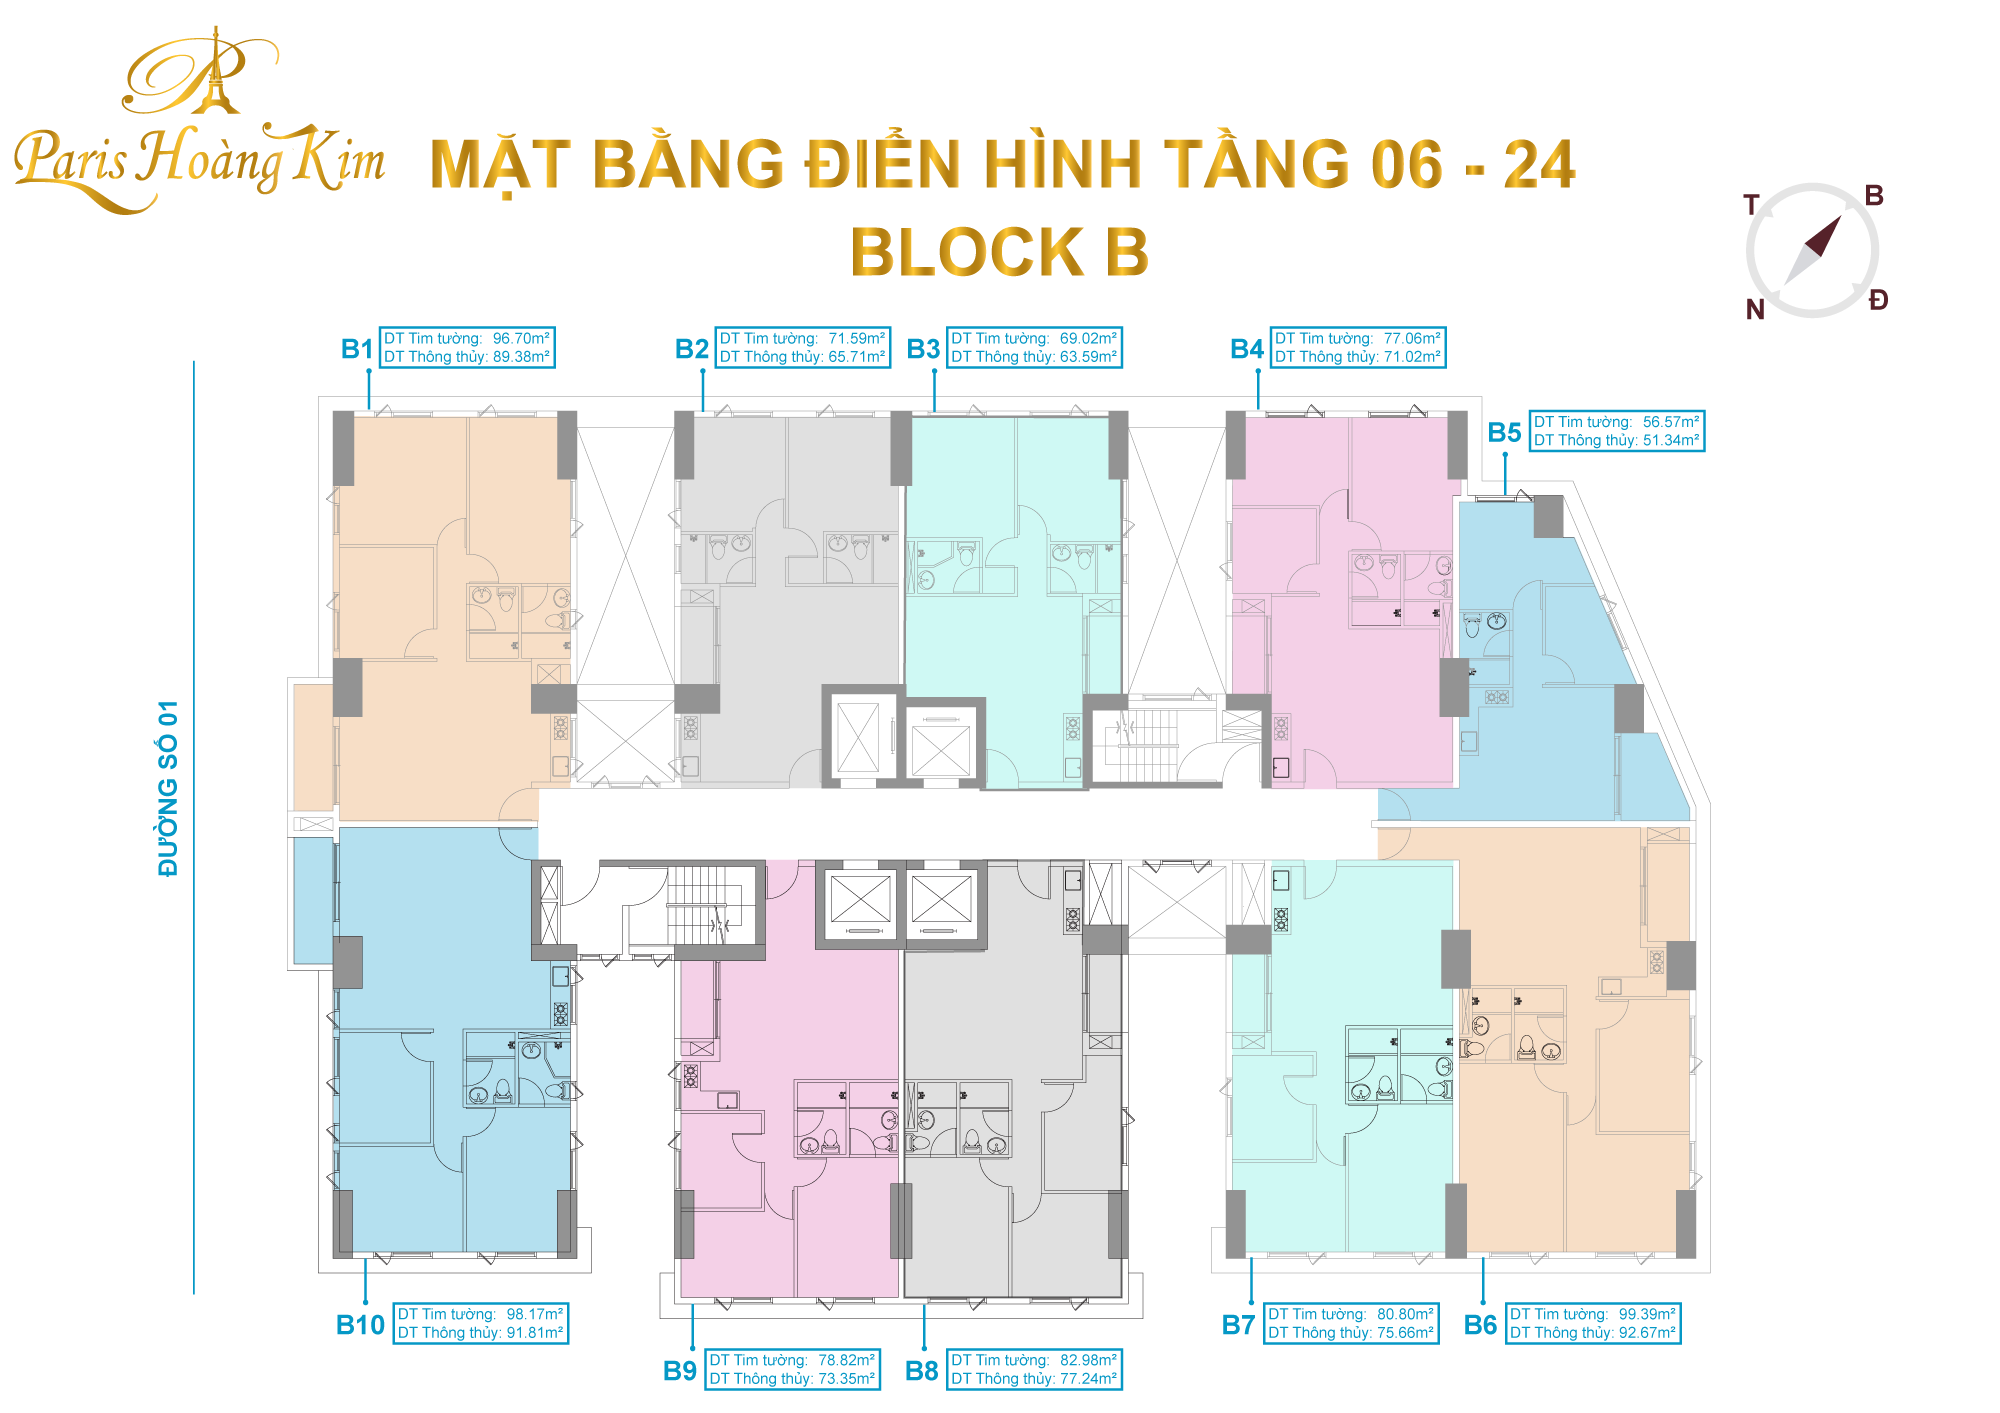 mat-bang-dien-hinh-tang 6 - 24 - block B- du- an- chung- cu-paris- hoang-kim